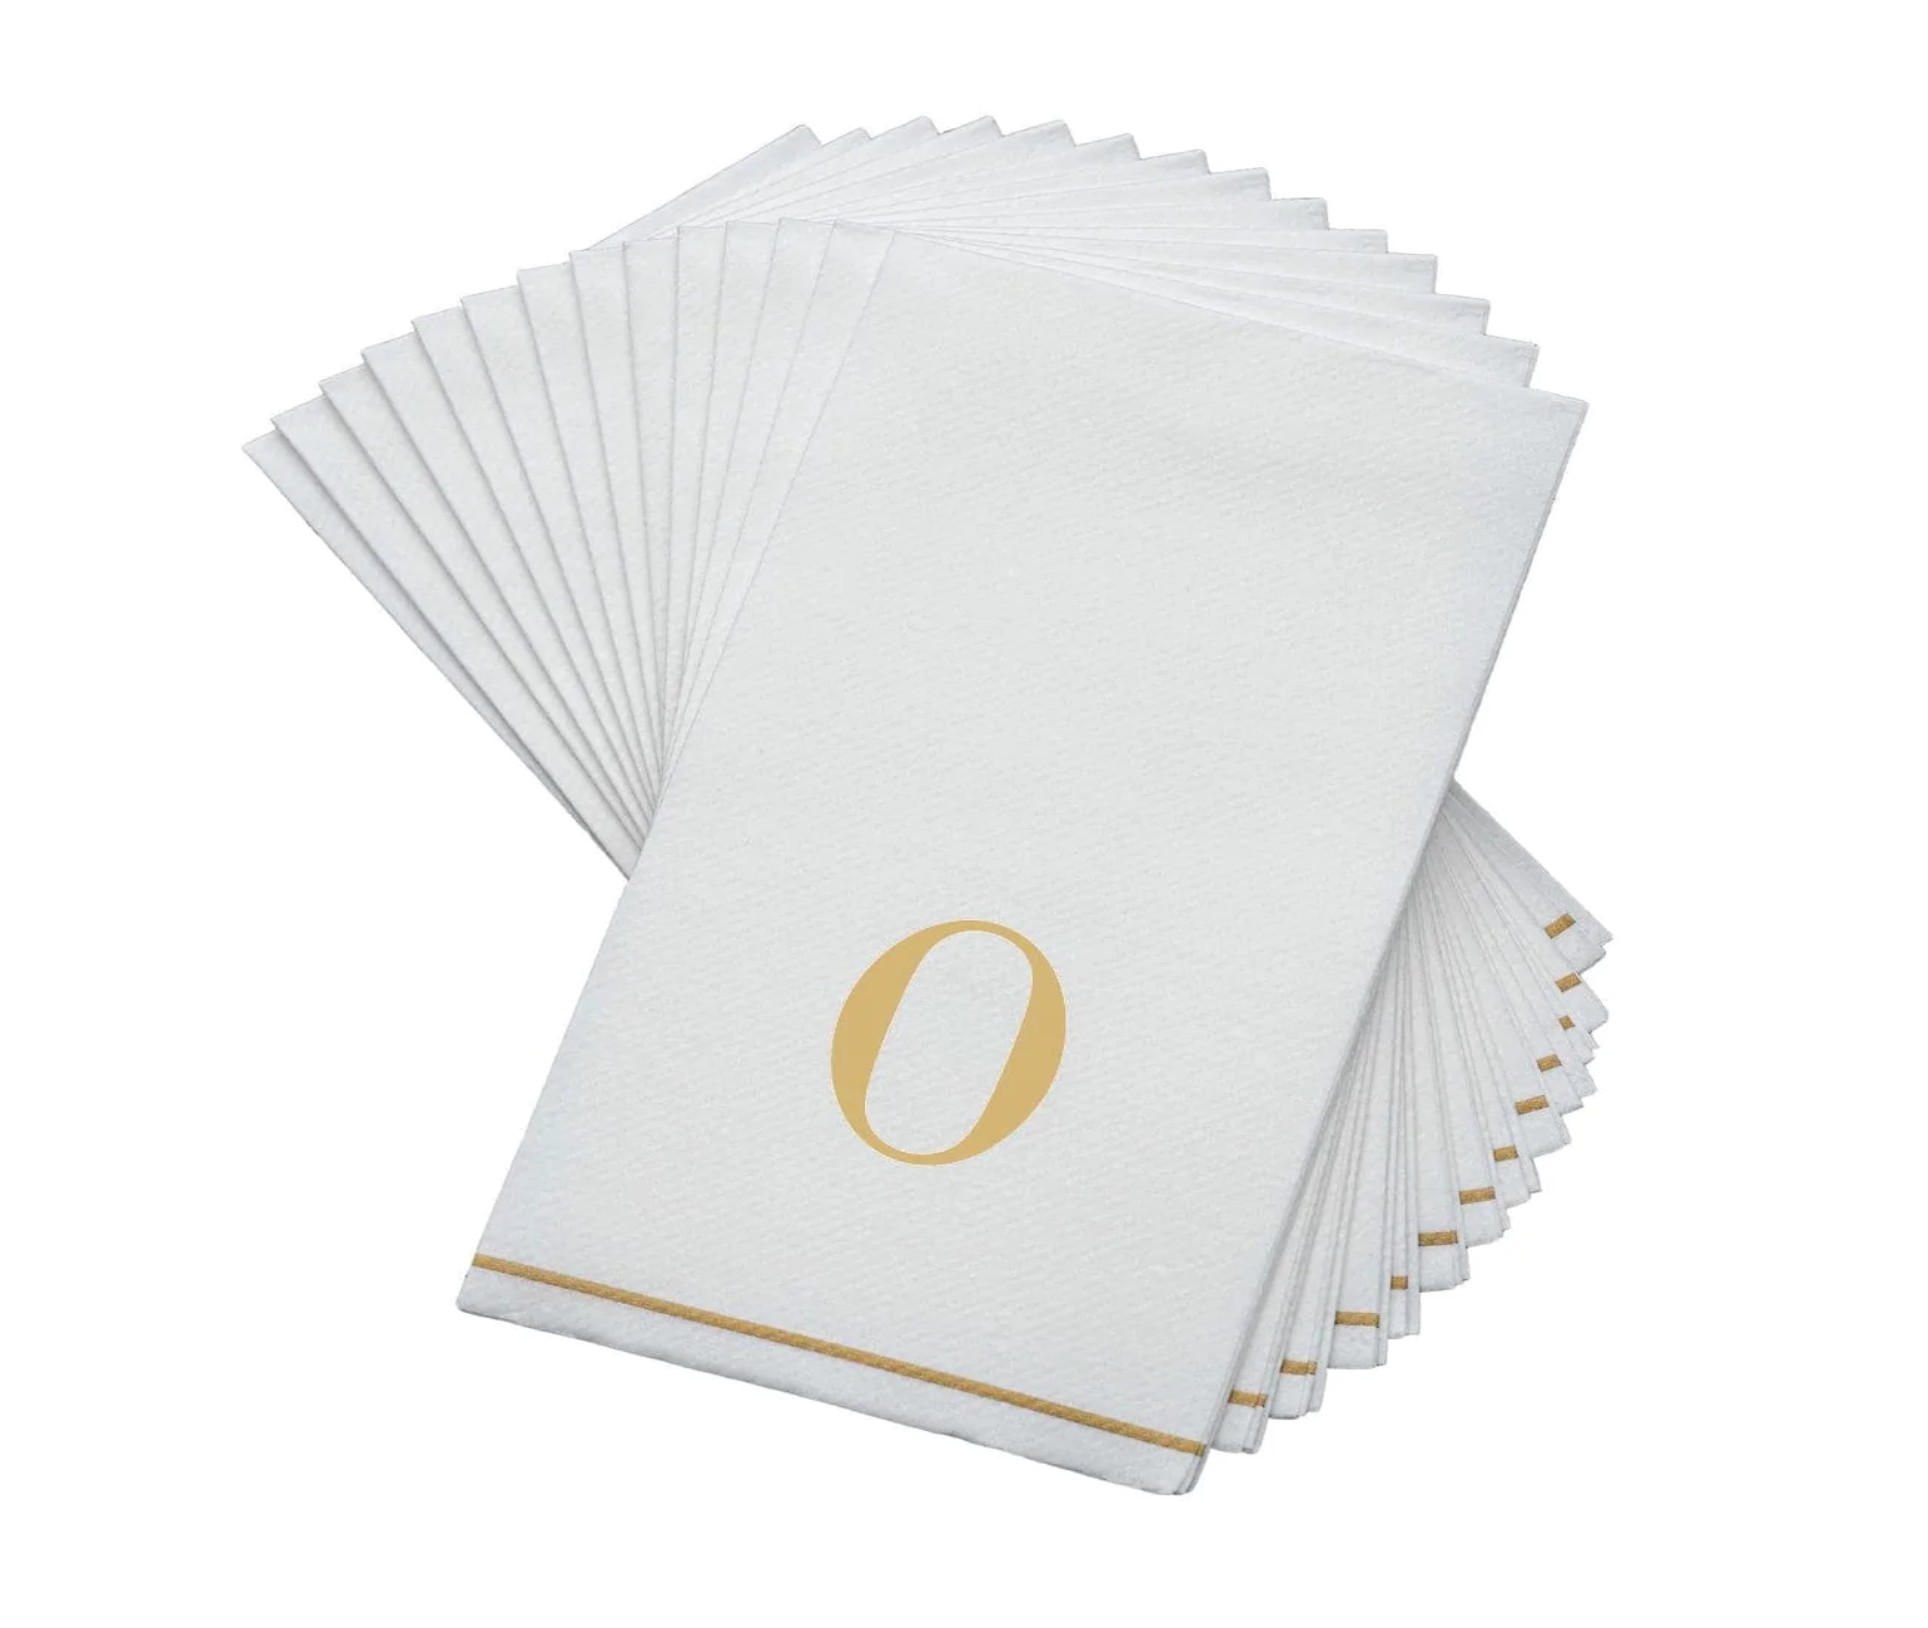 Luxe Party Bodoni Script Single Initial Gold Letter O Paper Guest Napkins- 14 pcs